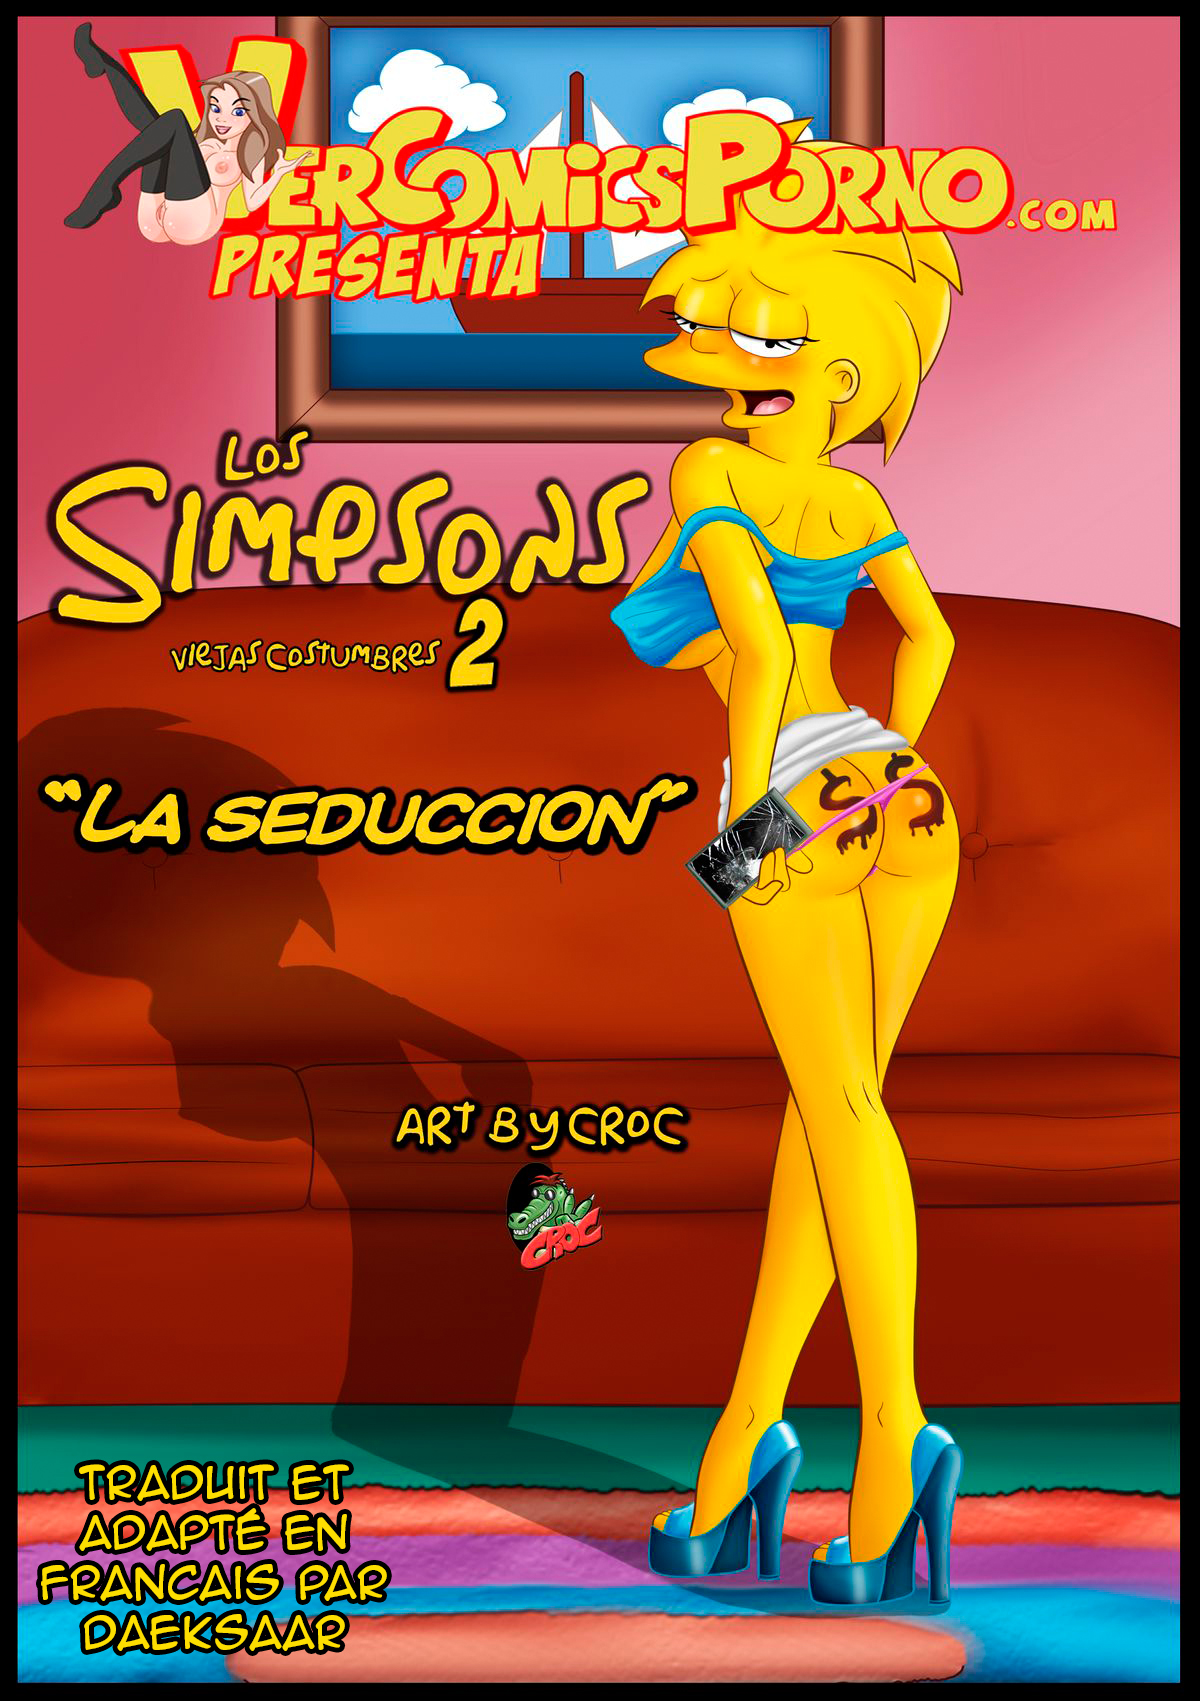 SureFap xxx porno The Simpsons - [VerComicsPorno][Croc] - Los Simpsons Viejas Costumbres.2 La seduccion